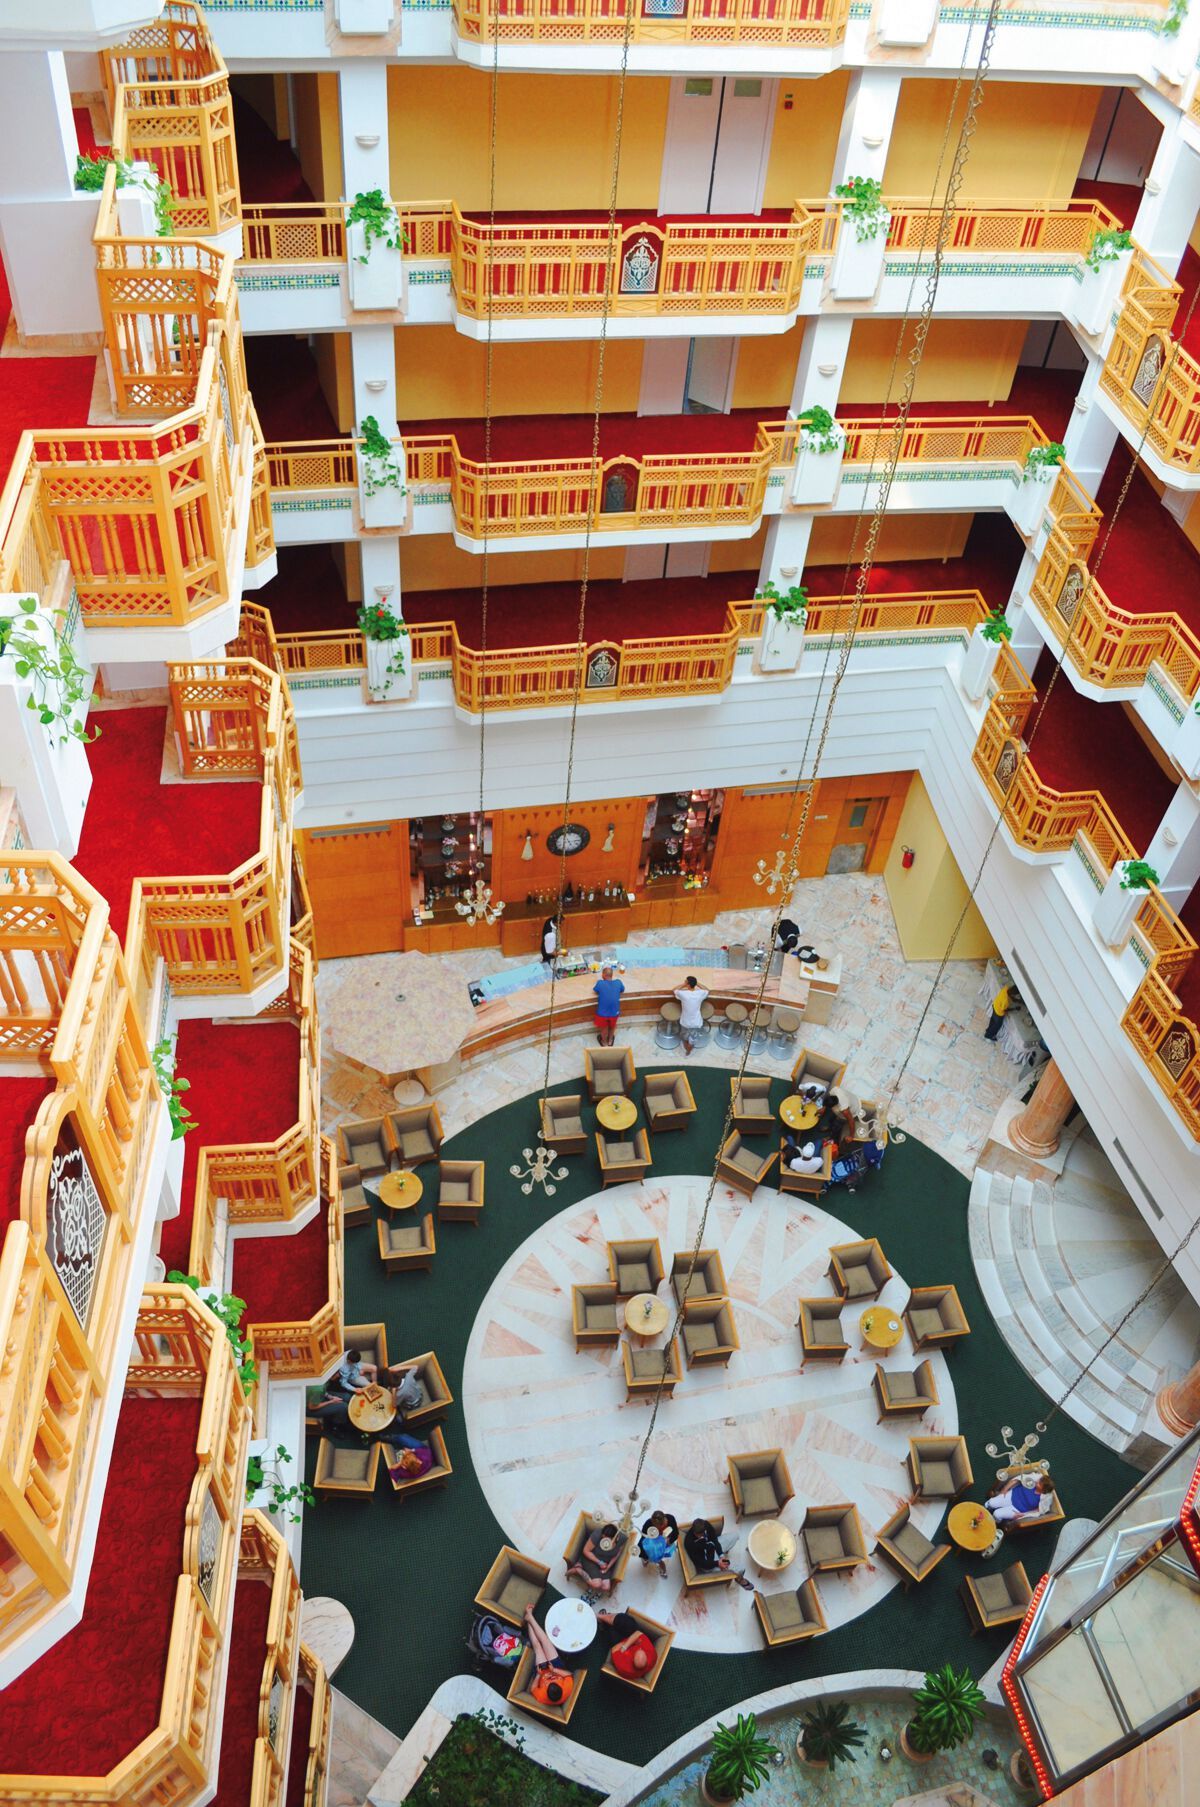 Tunisie - Sousse - Hôtel Marhaba Royal Salem 4*